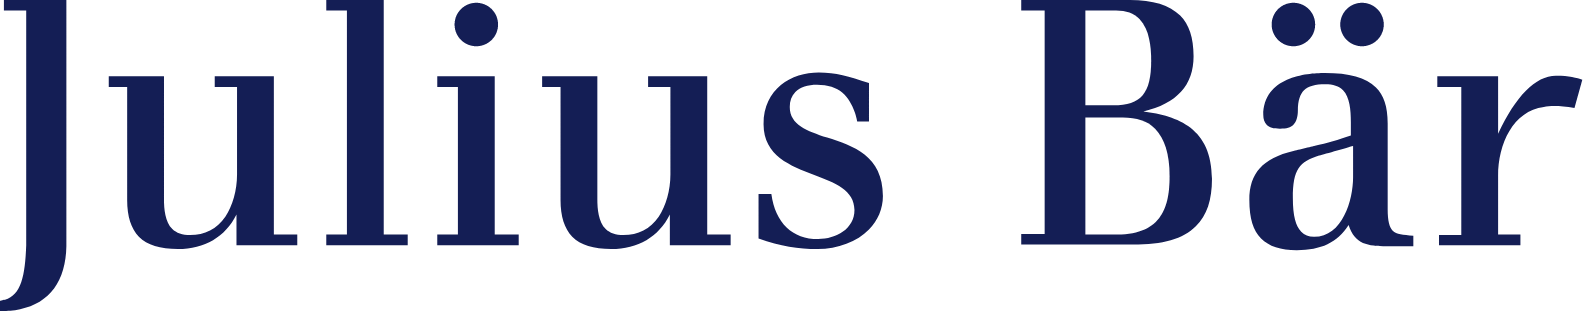 Julius Bär logo large (transparent PNG)